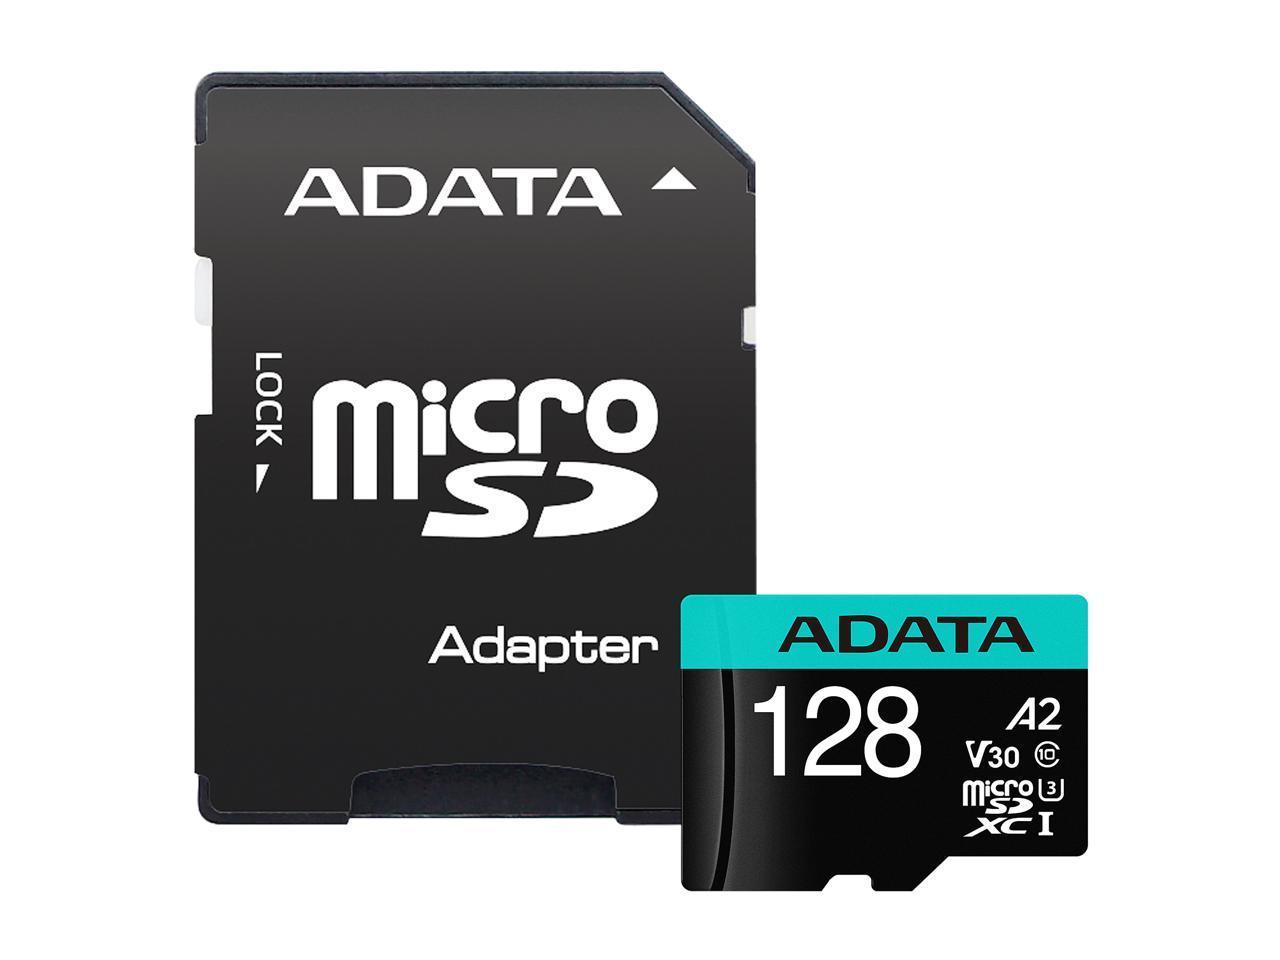 AData 128GB Class 10 UHS-I U3 Premier Pro microSDXC Memory Card for $7.49 Shipped